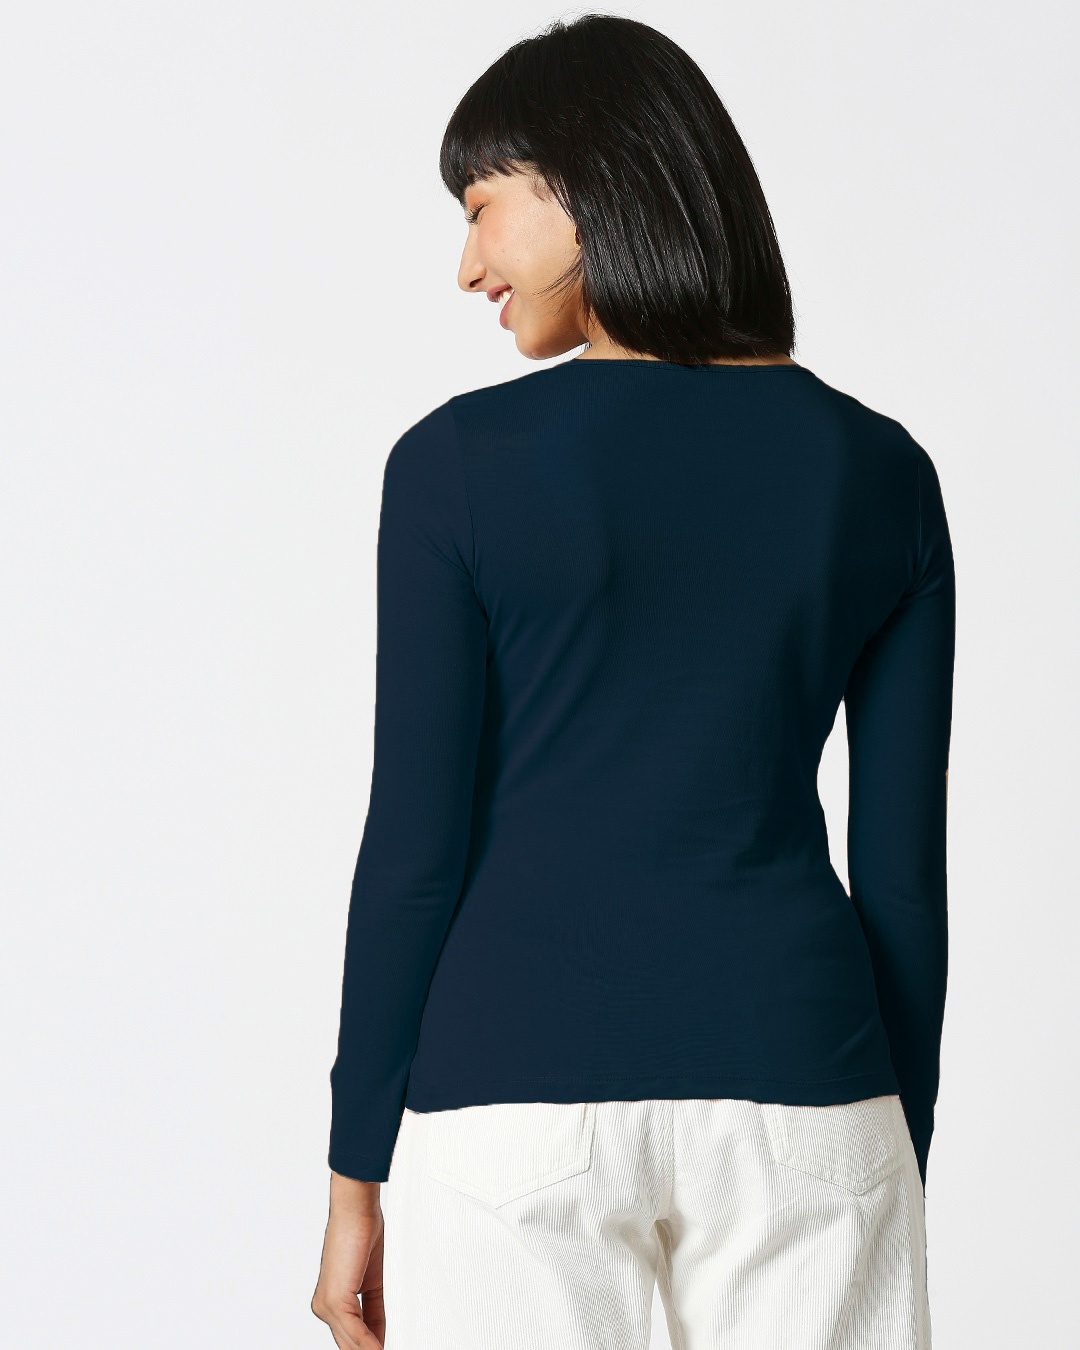 Buy Navy Blue Full Sleeve Henley T-Shirt for Women blue Online at Bewakoof